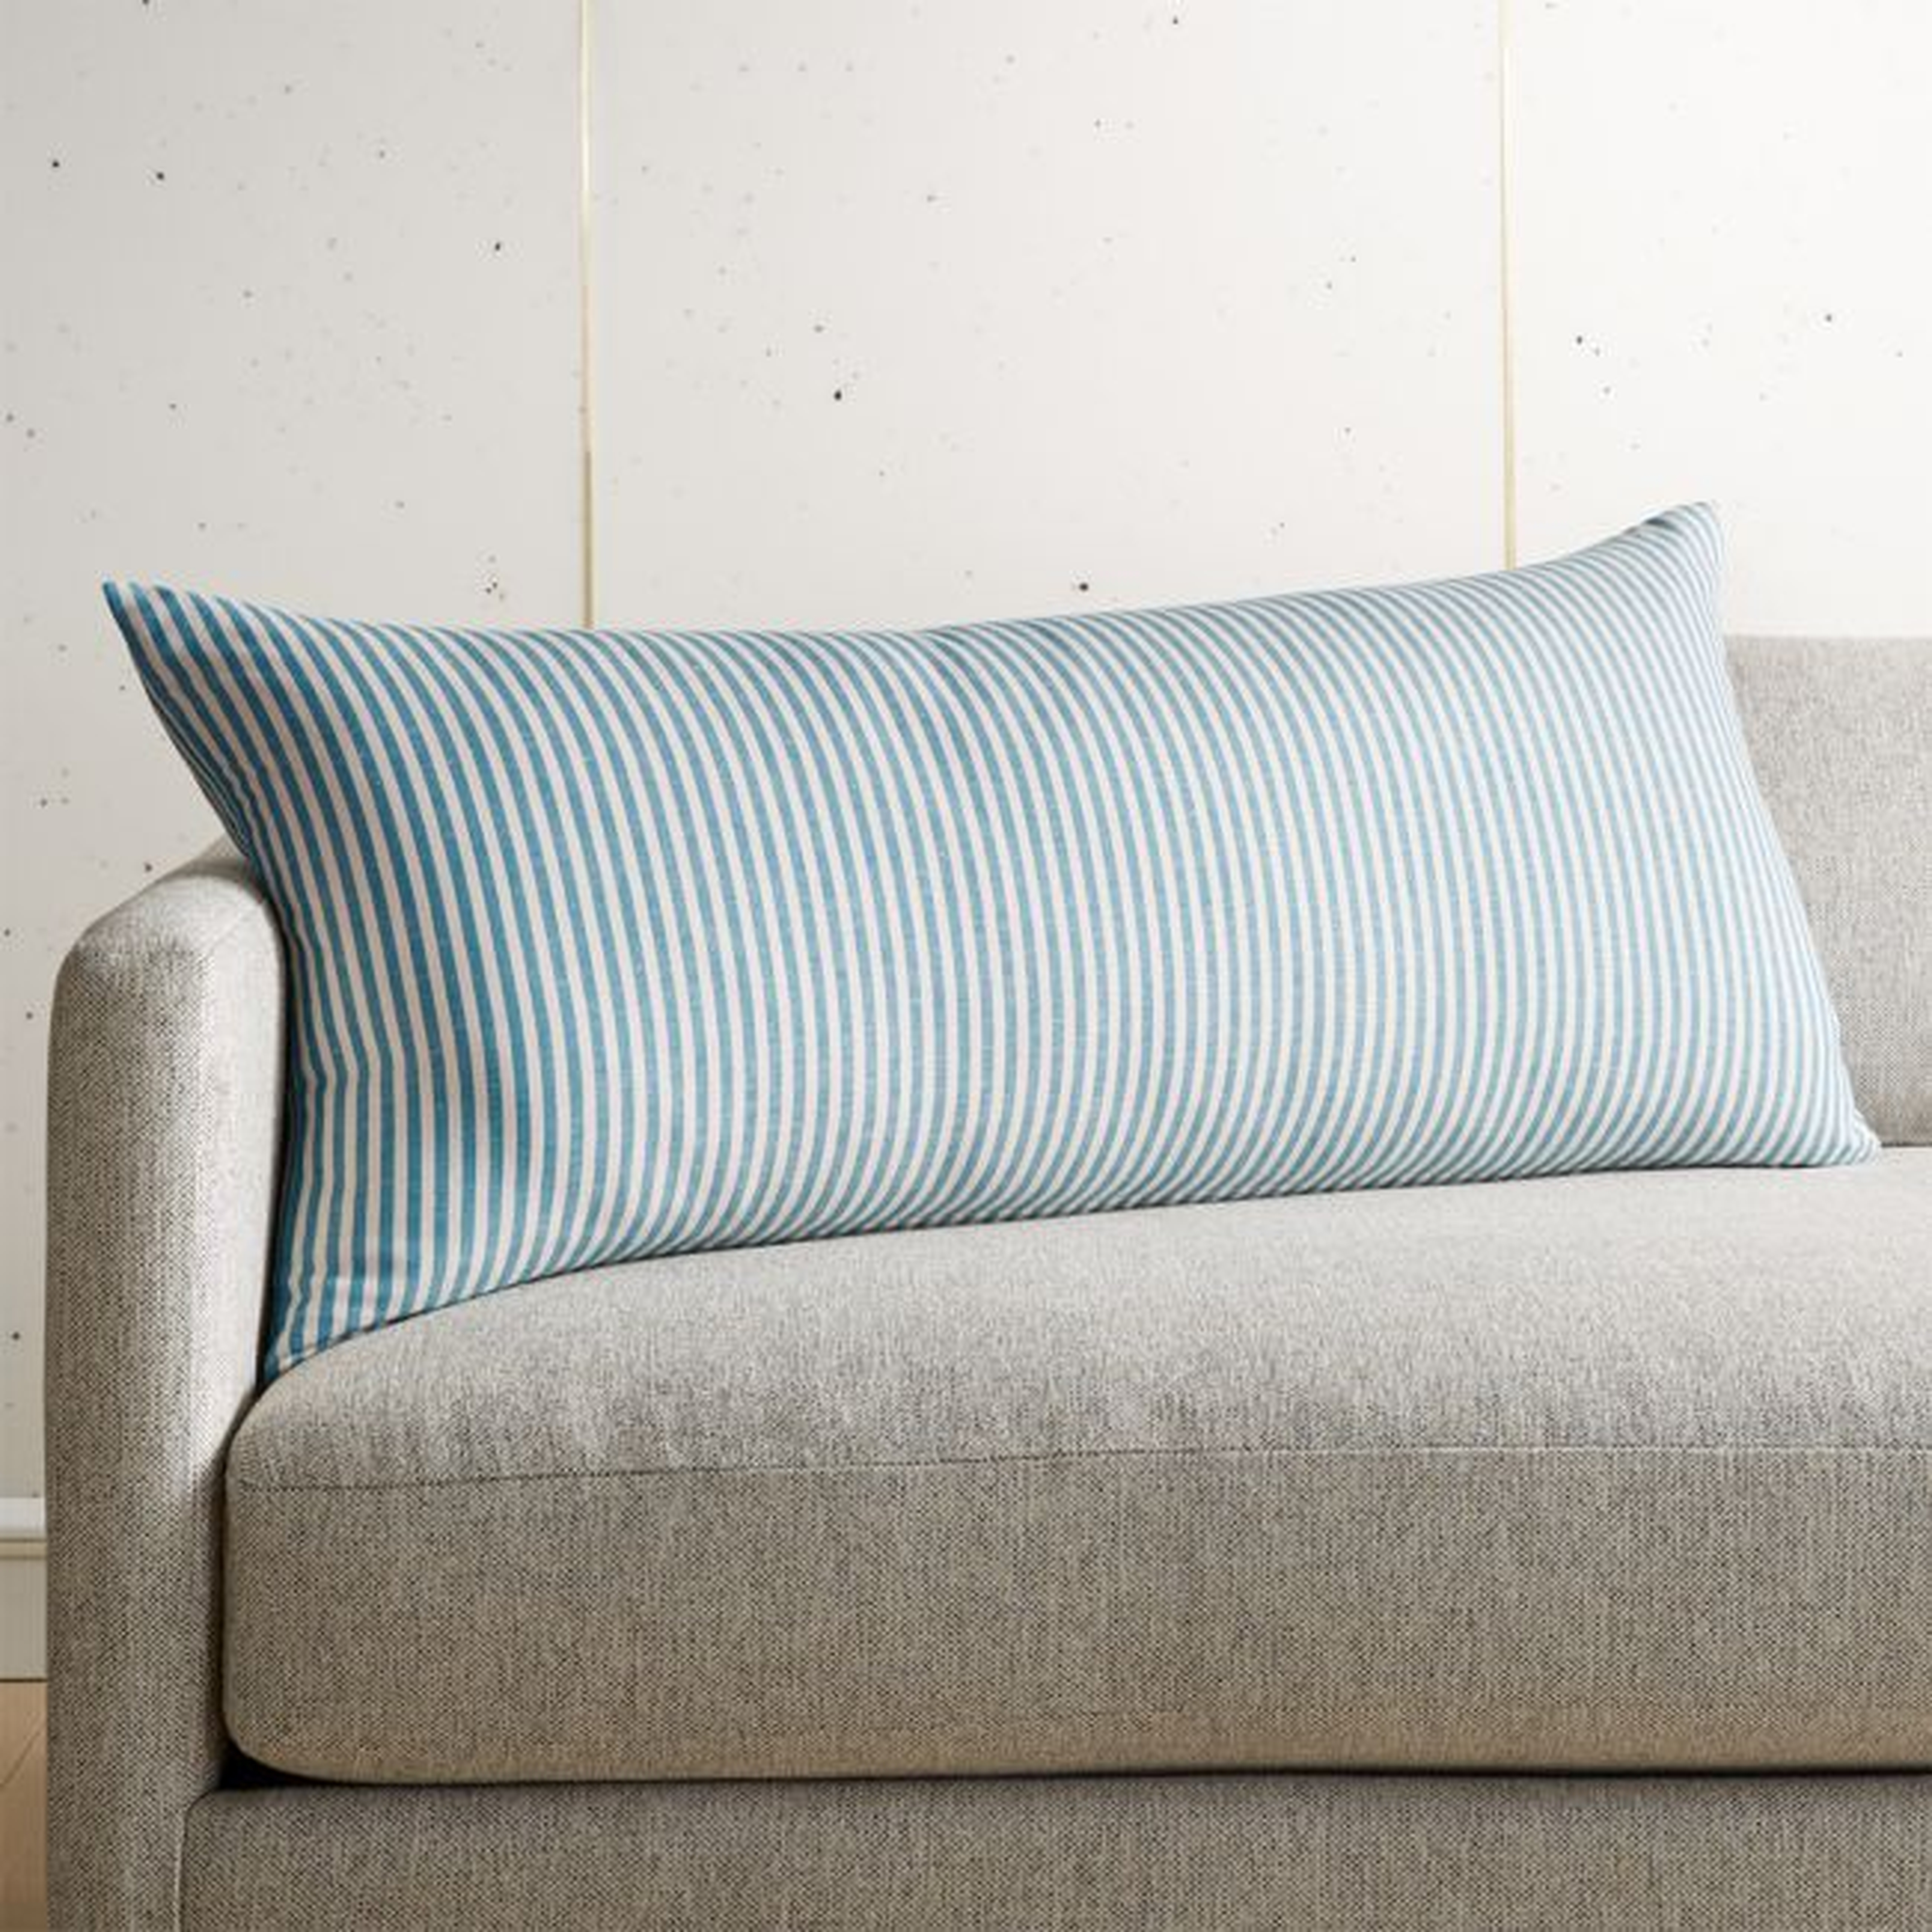 36"x16" Costa Nova Linen Stripe Pillow with Down-Alternative Insert - CB2